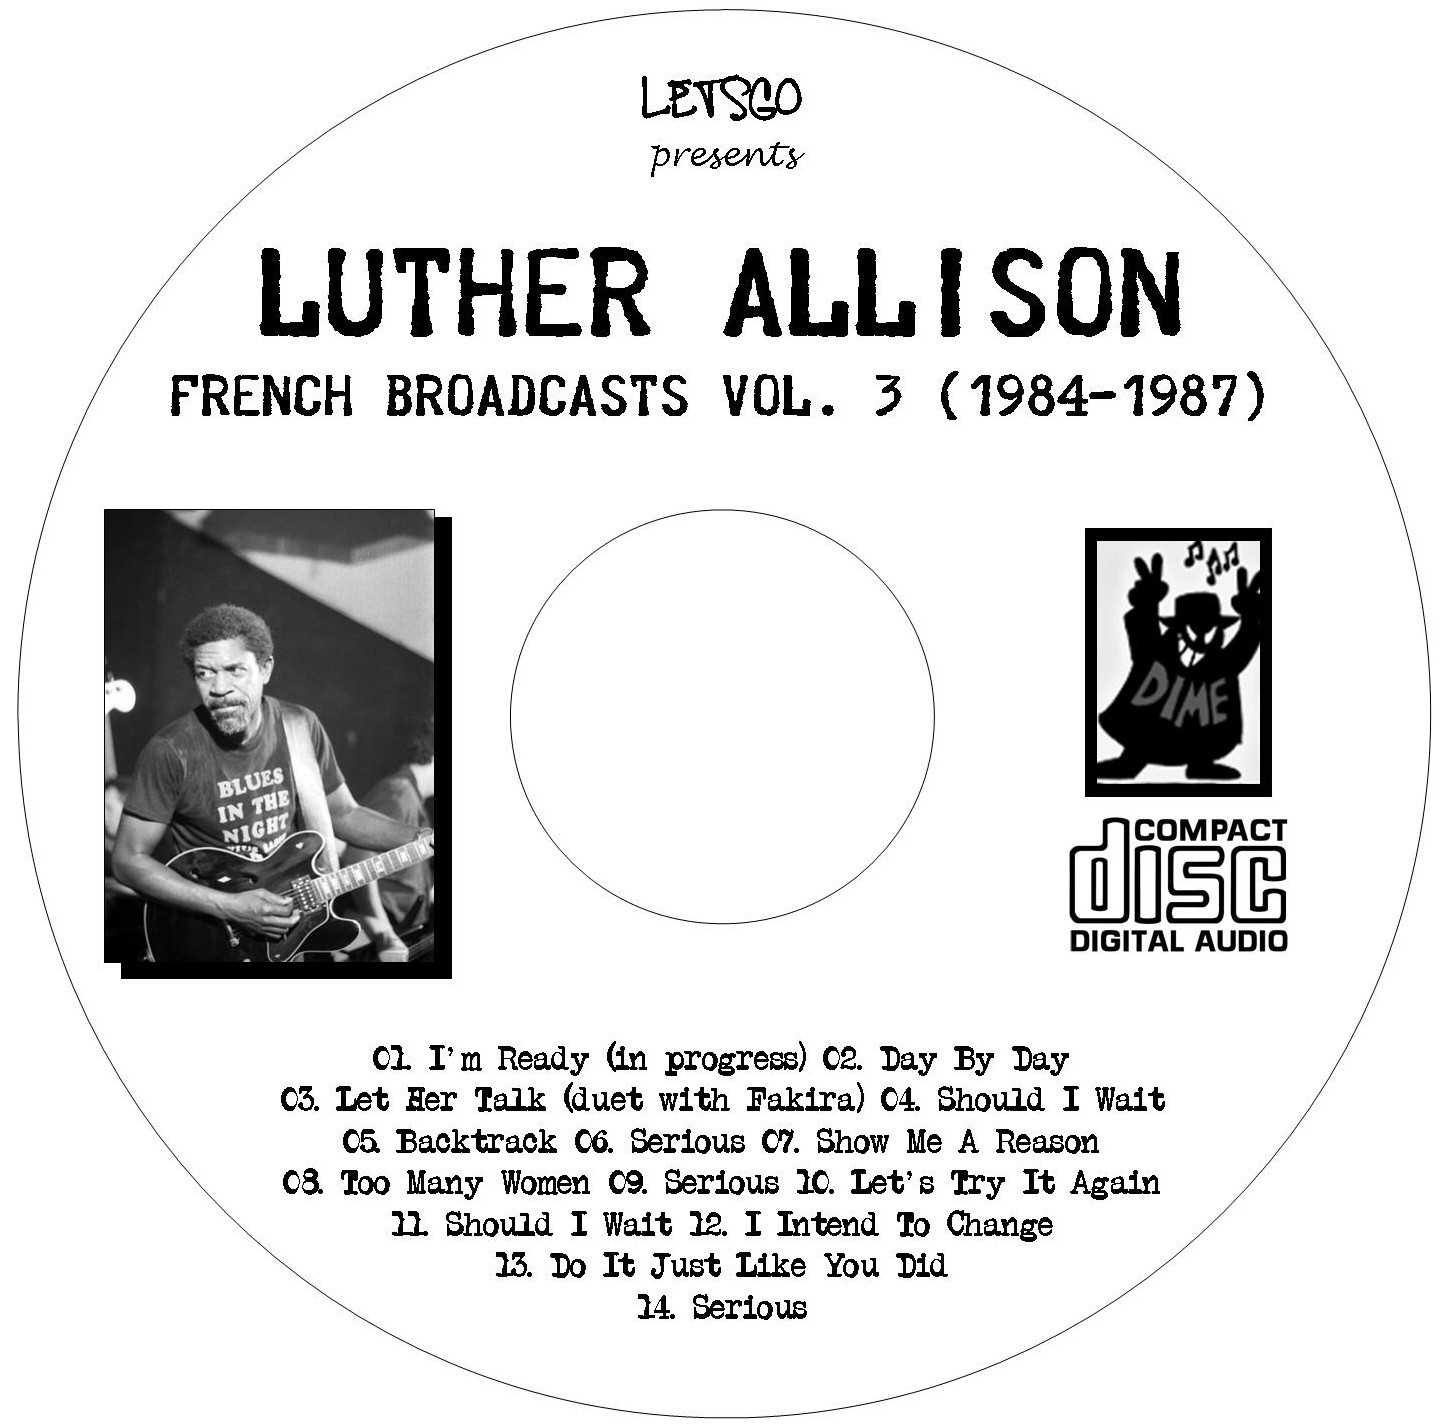 LutherAllison1984-1987FrenchBroadcastsVol3 (3).jpg